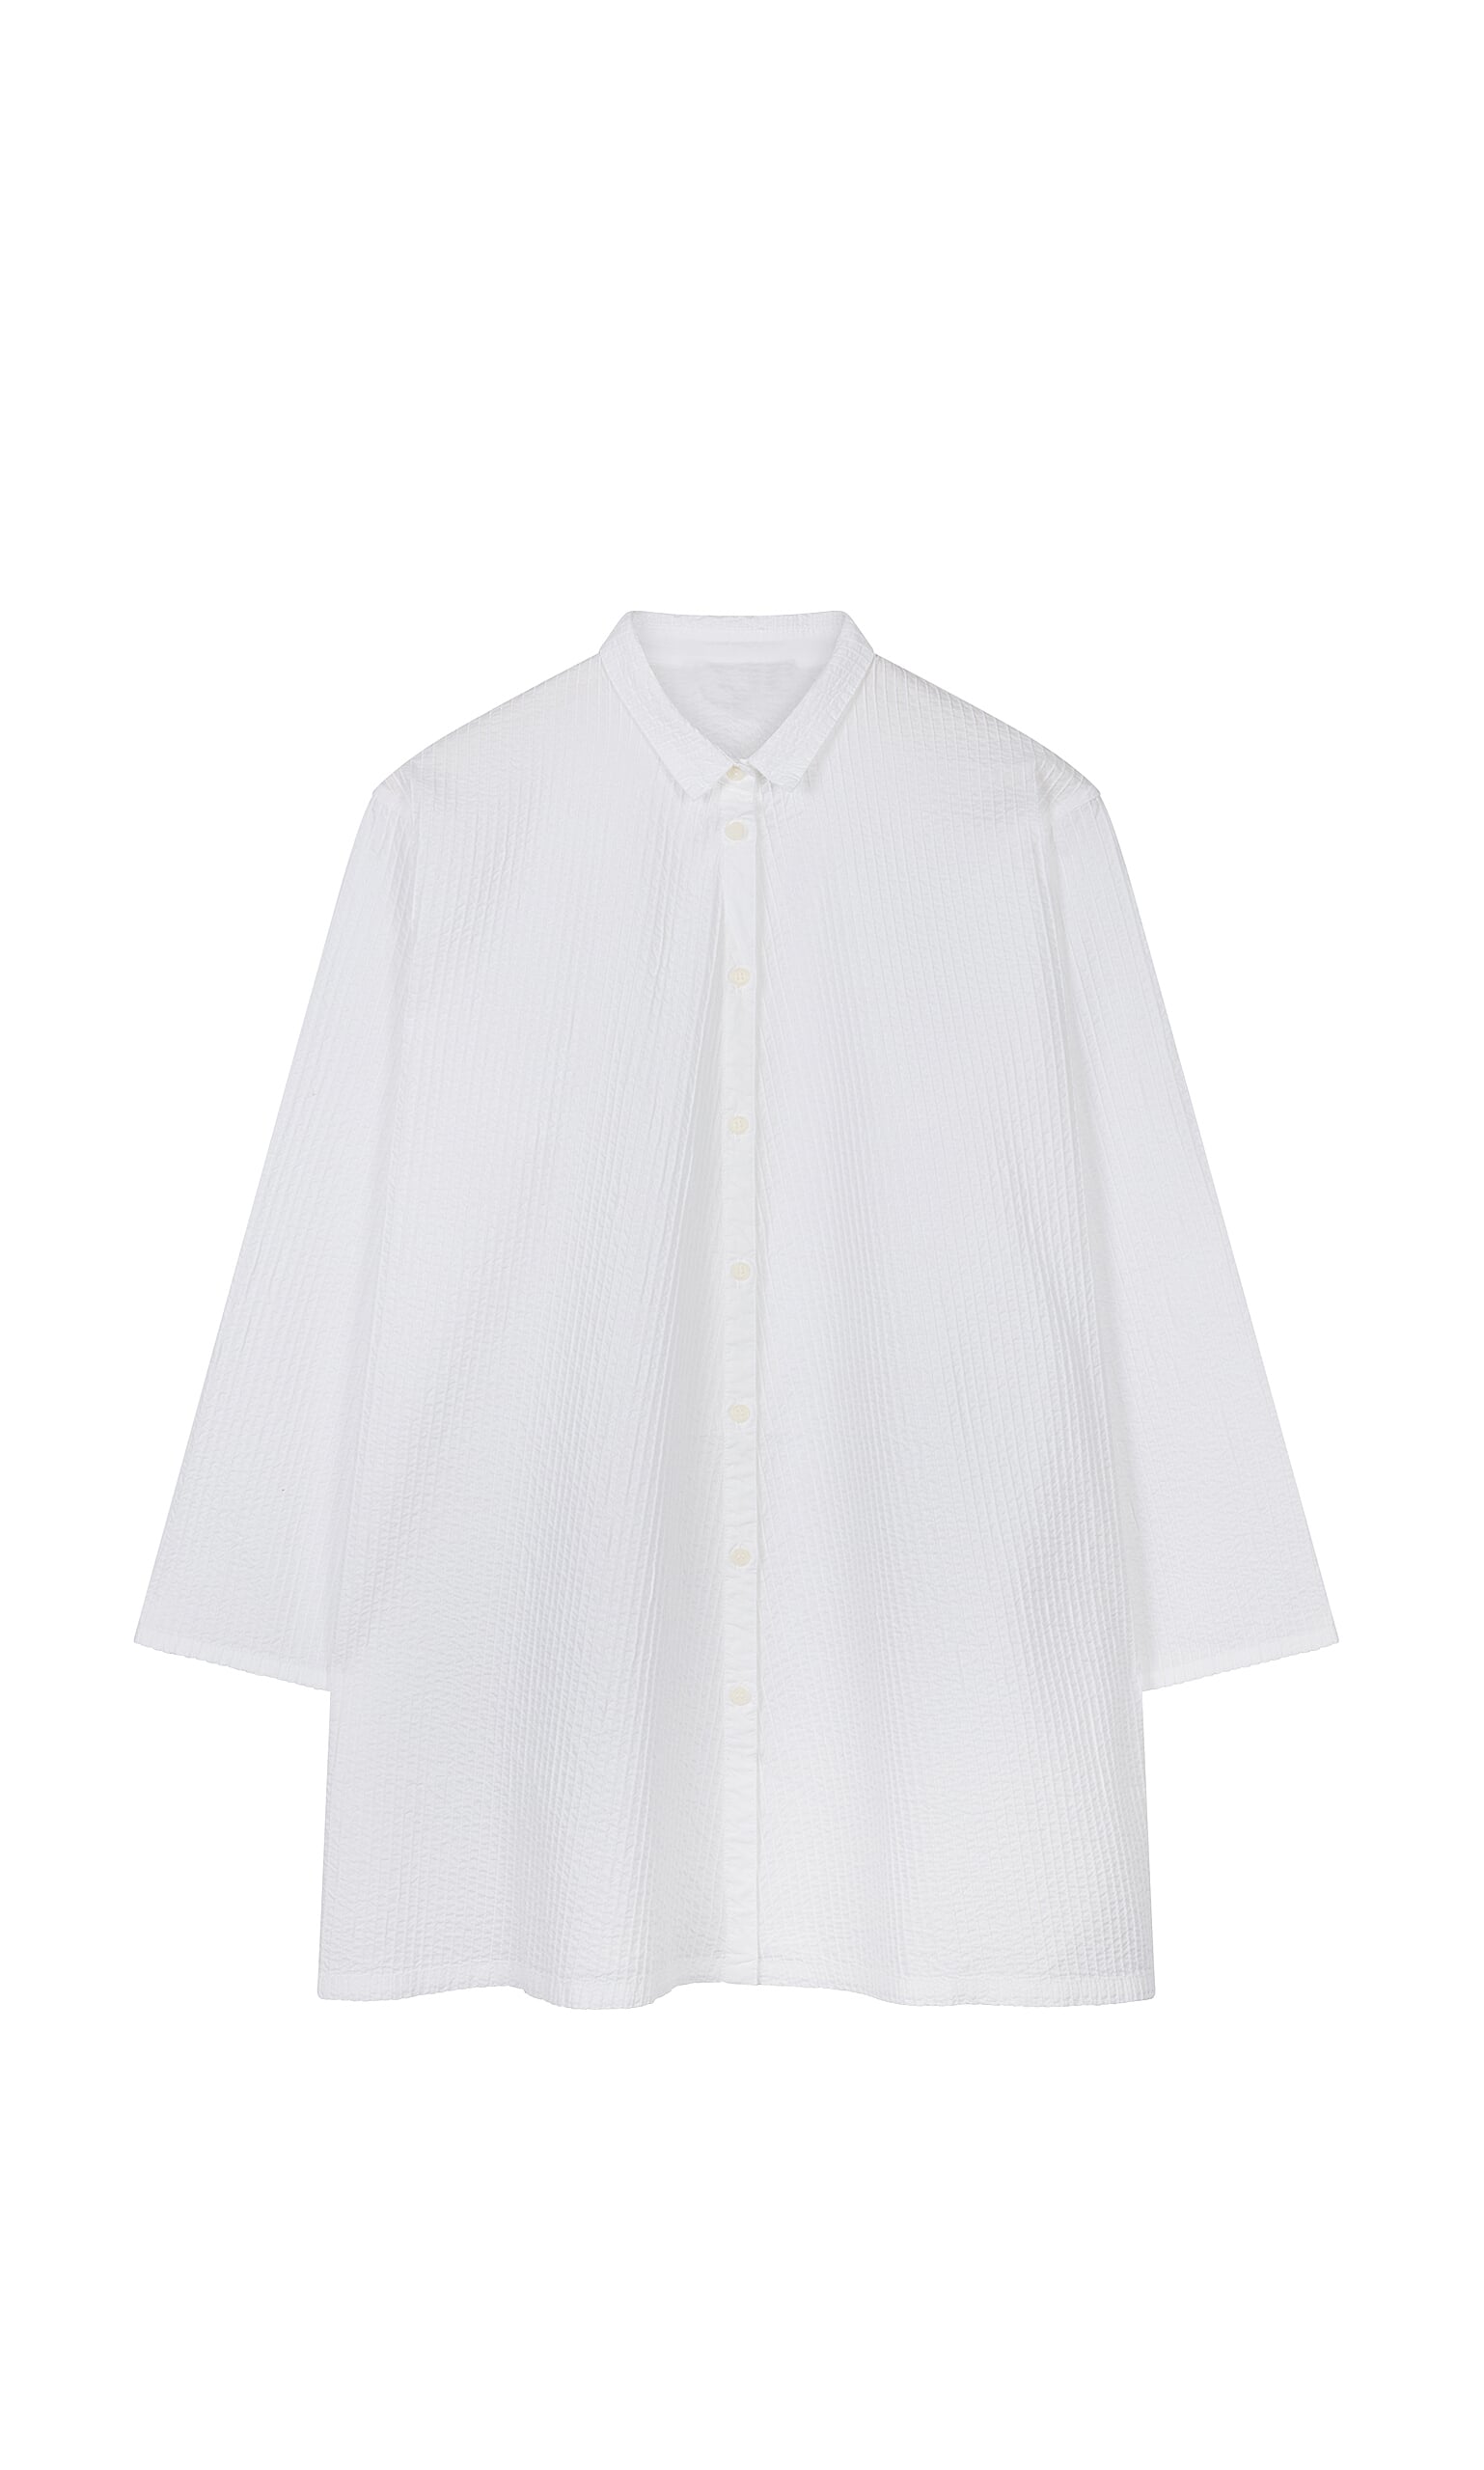 Lawn blouse by Yacco Maricard - Plümo Ltd